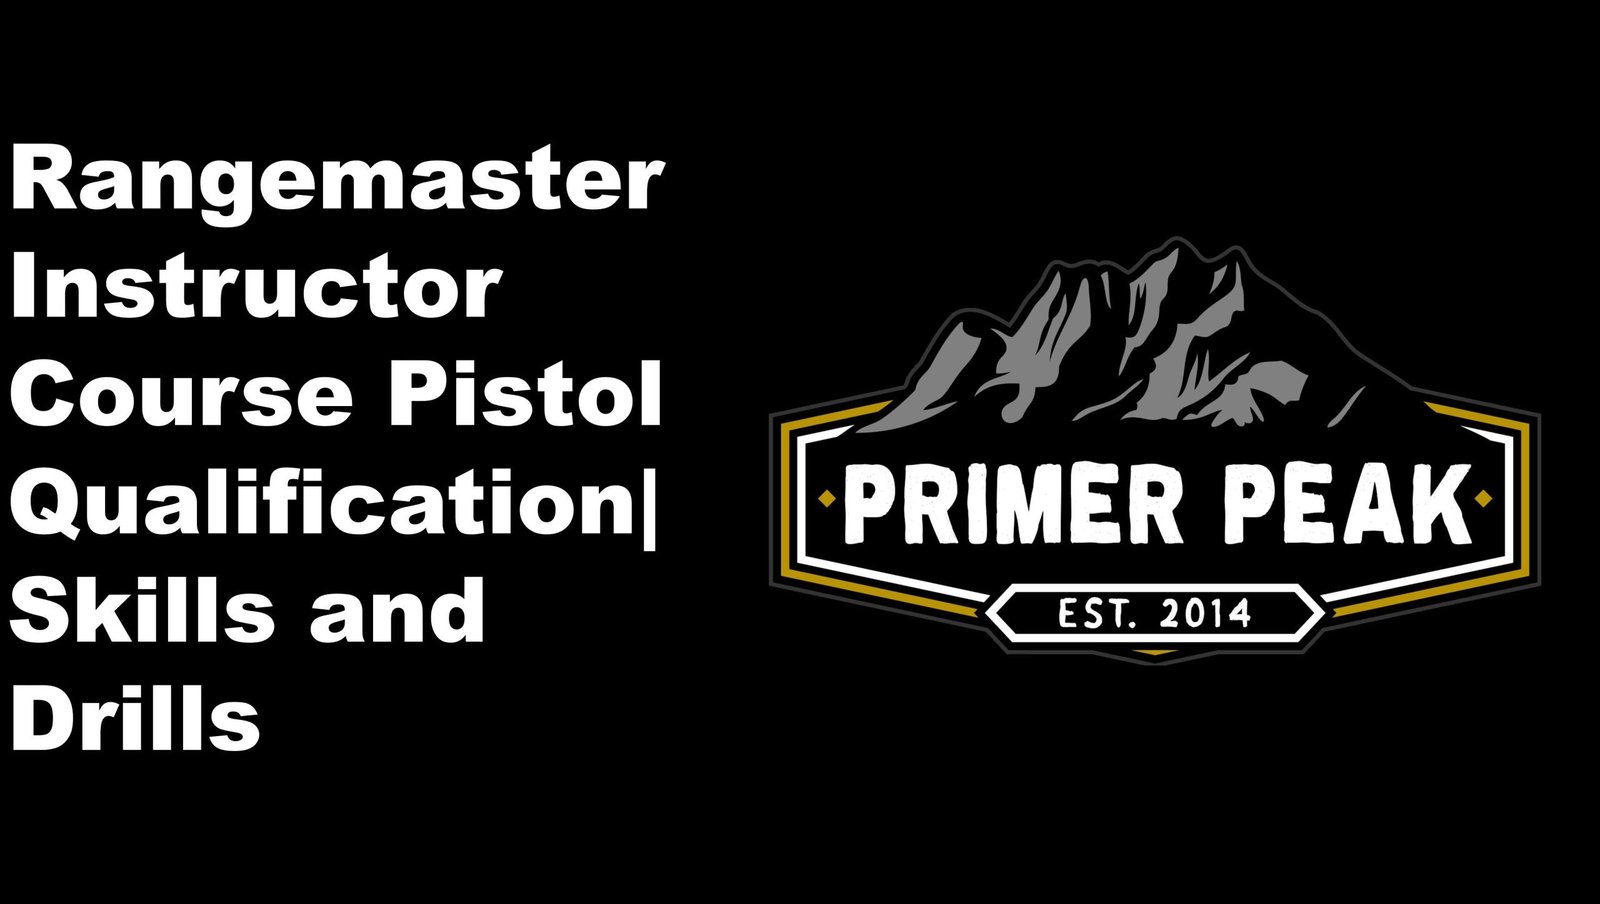 Rangemaster Instructor Course Pistol Qualification